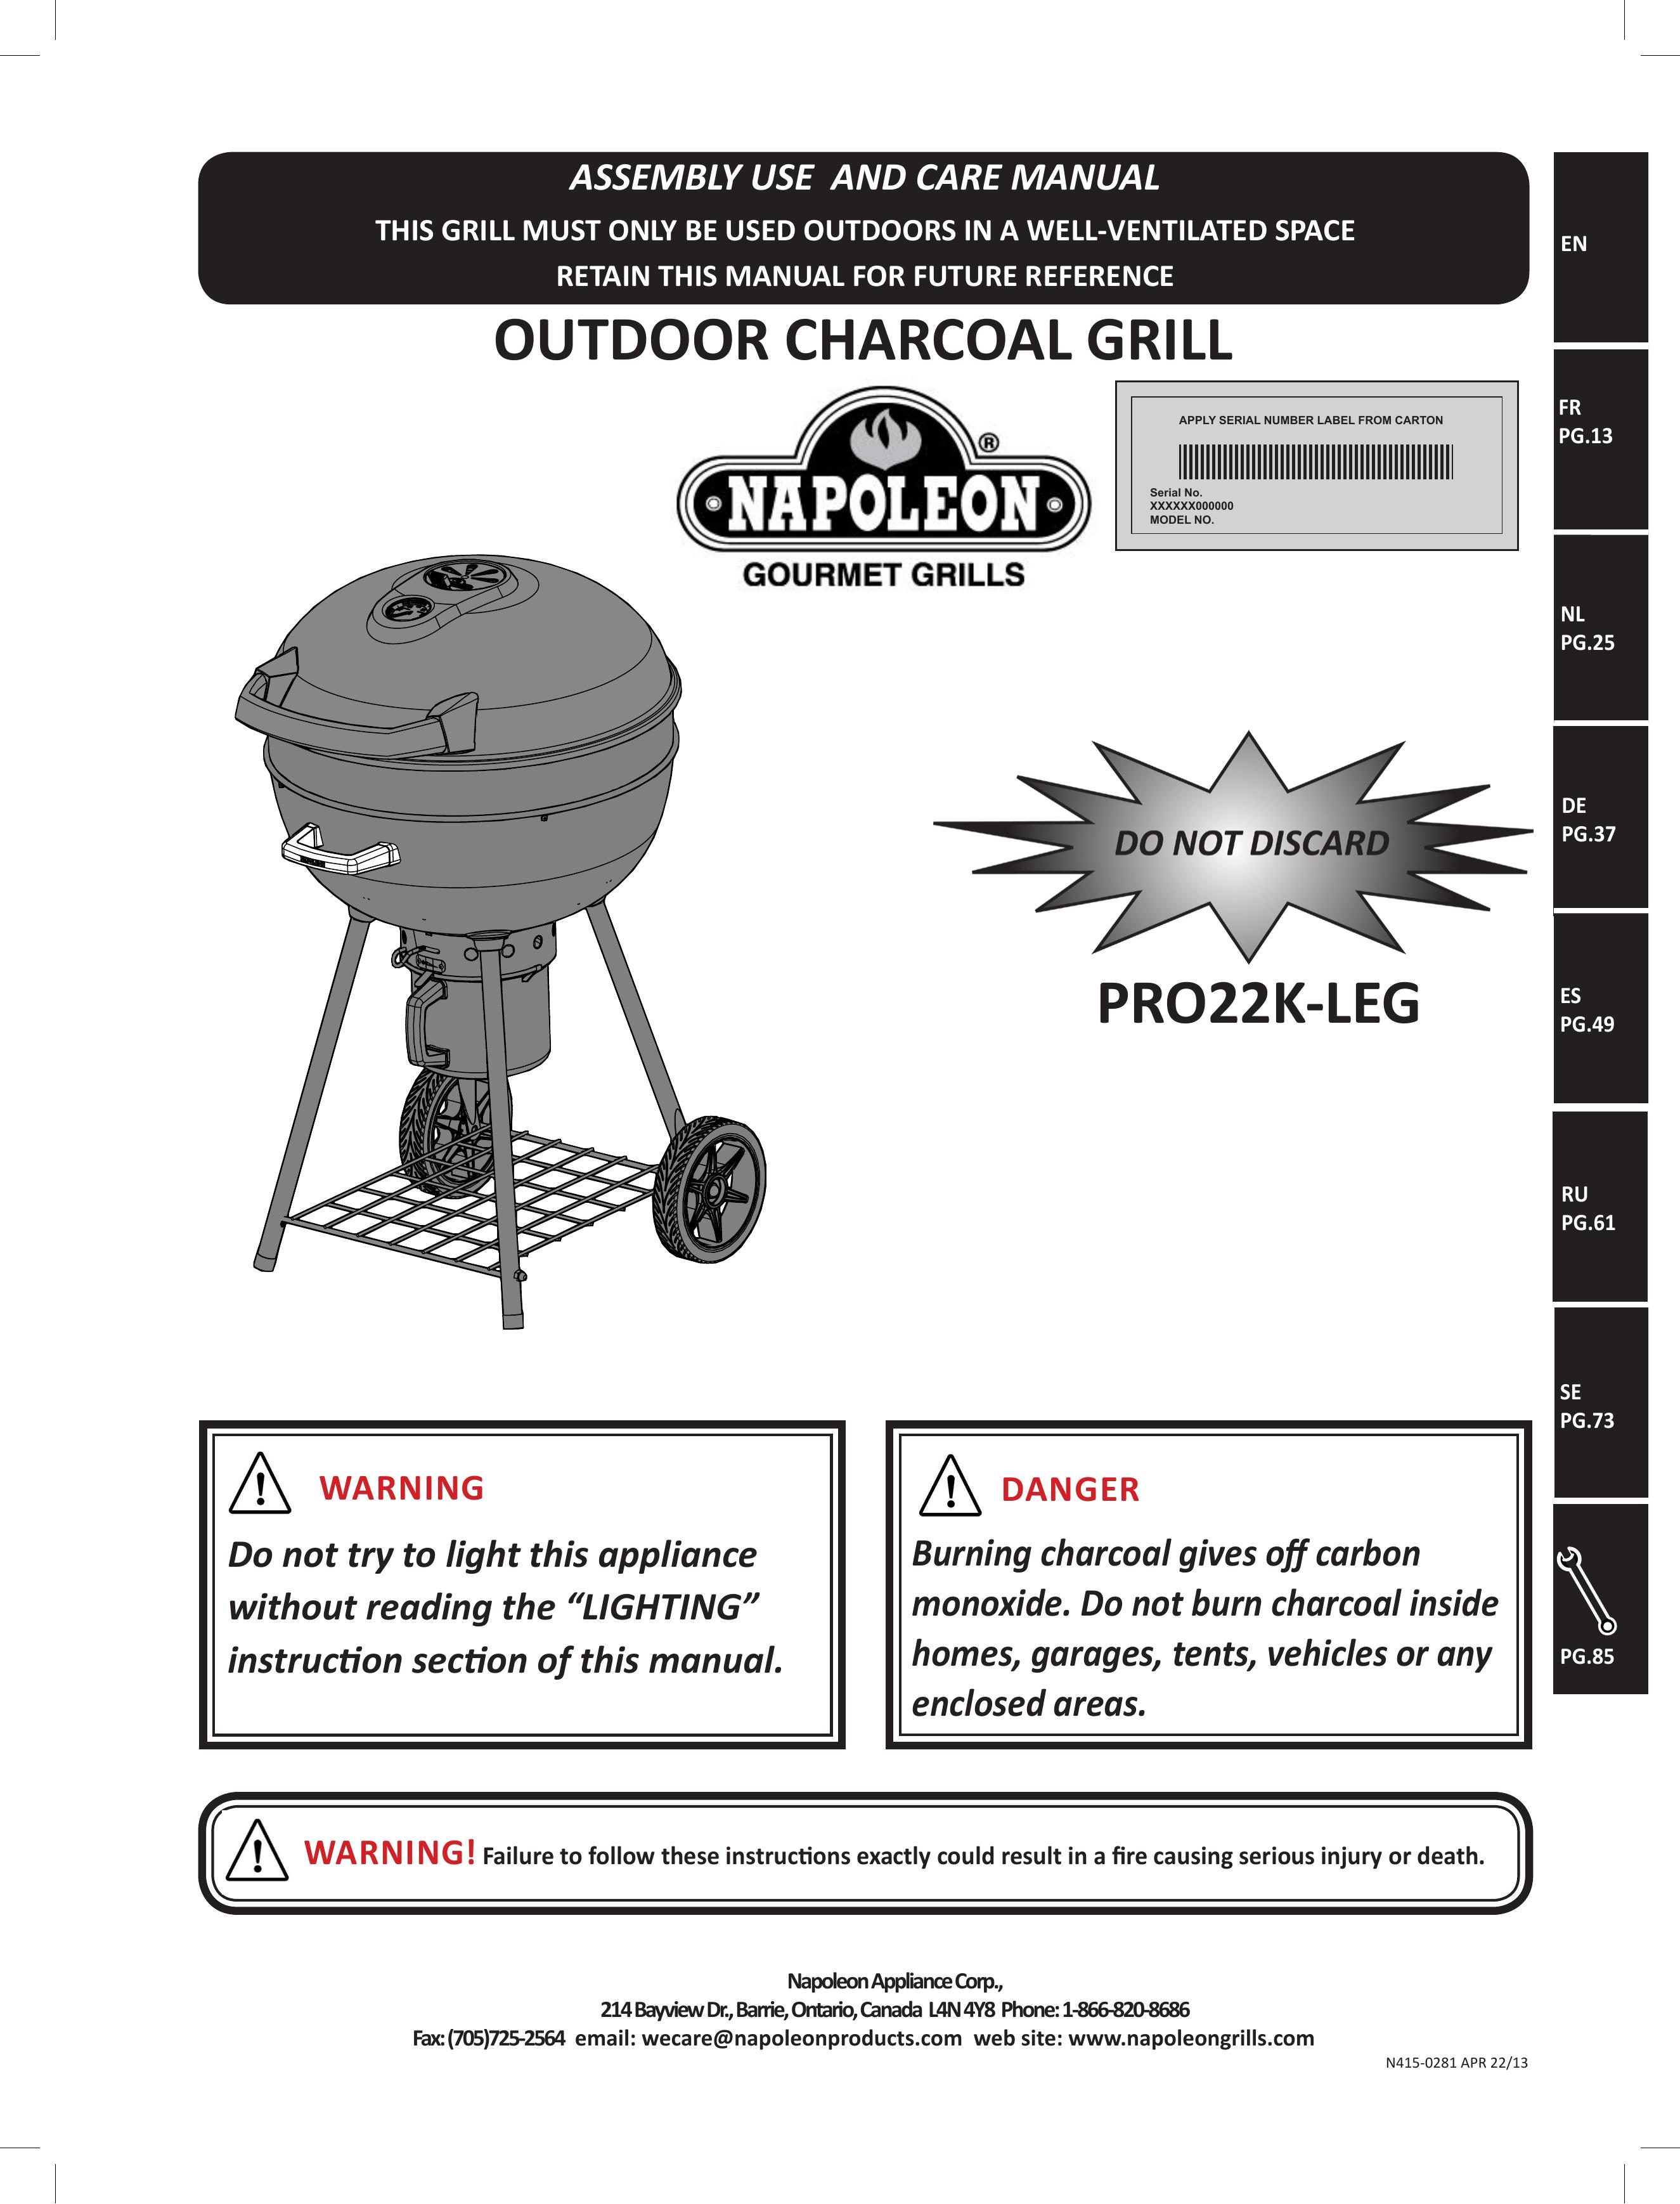 Napoleon Grills PRO22K-LEG Charcoal Grill User Manual